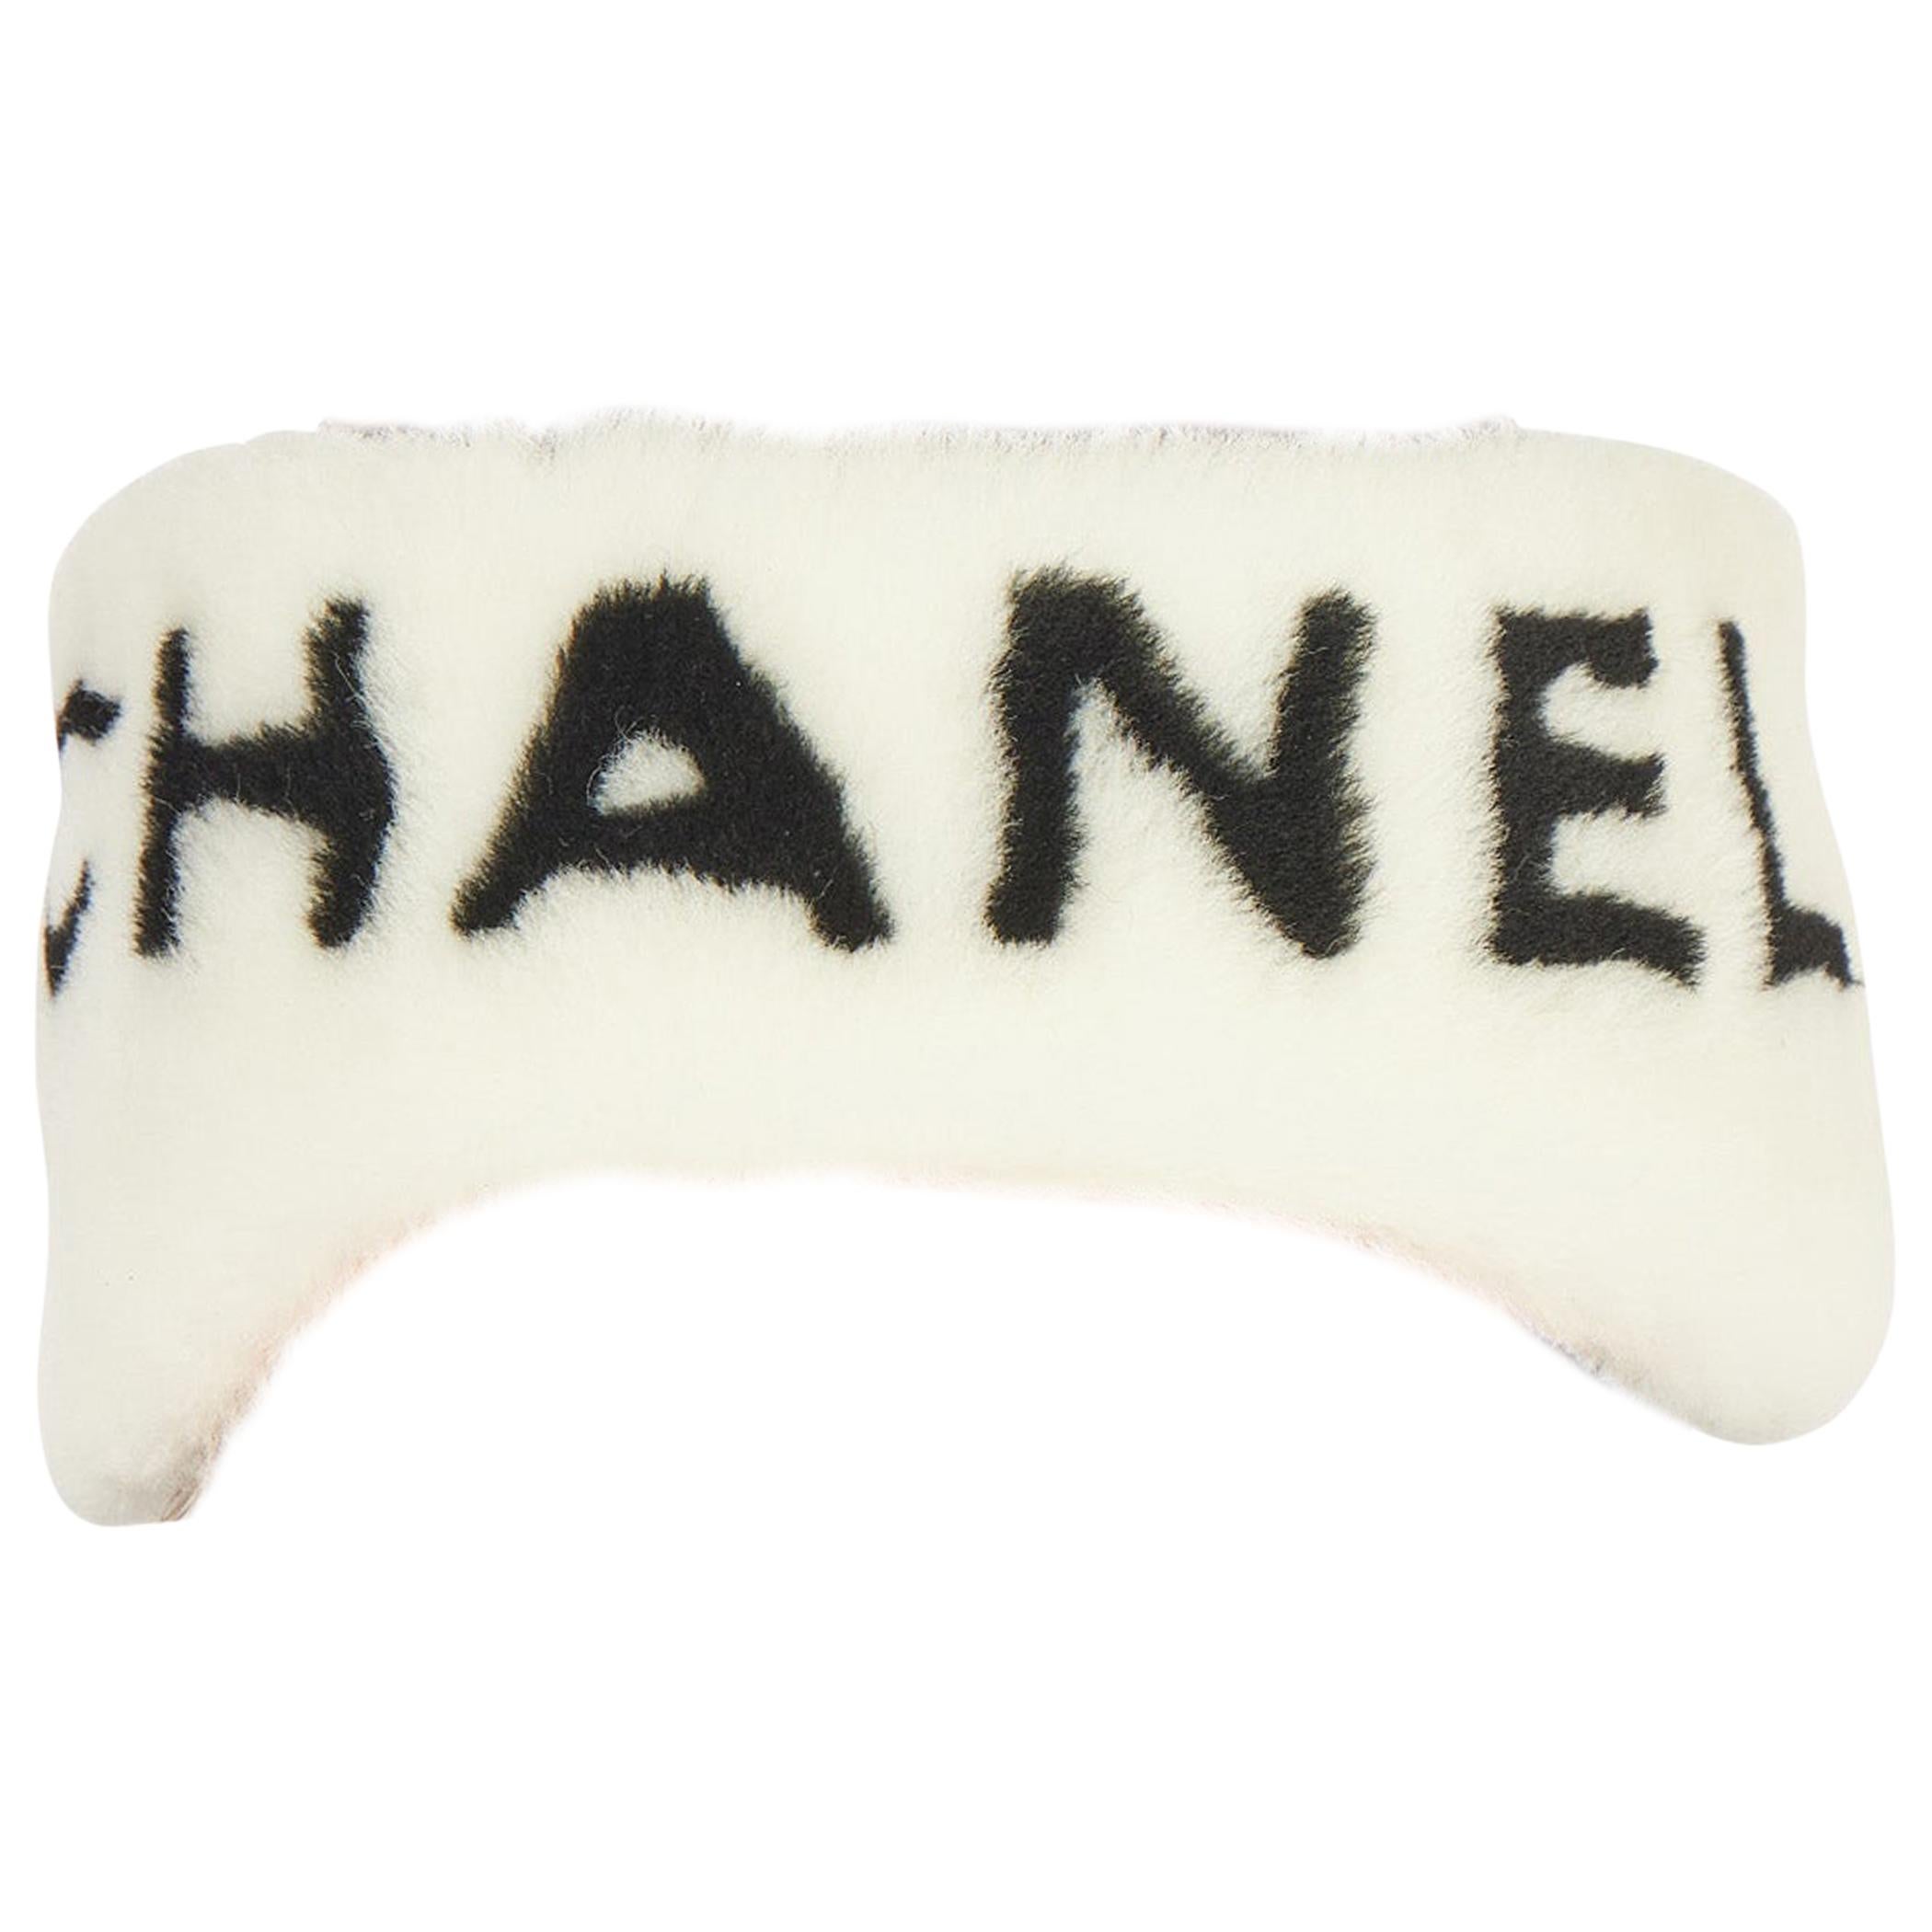 Bandeau Chanel blanc en peau de mouton, neuf dans sa boîte